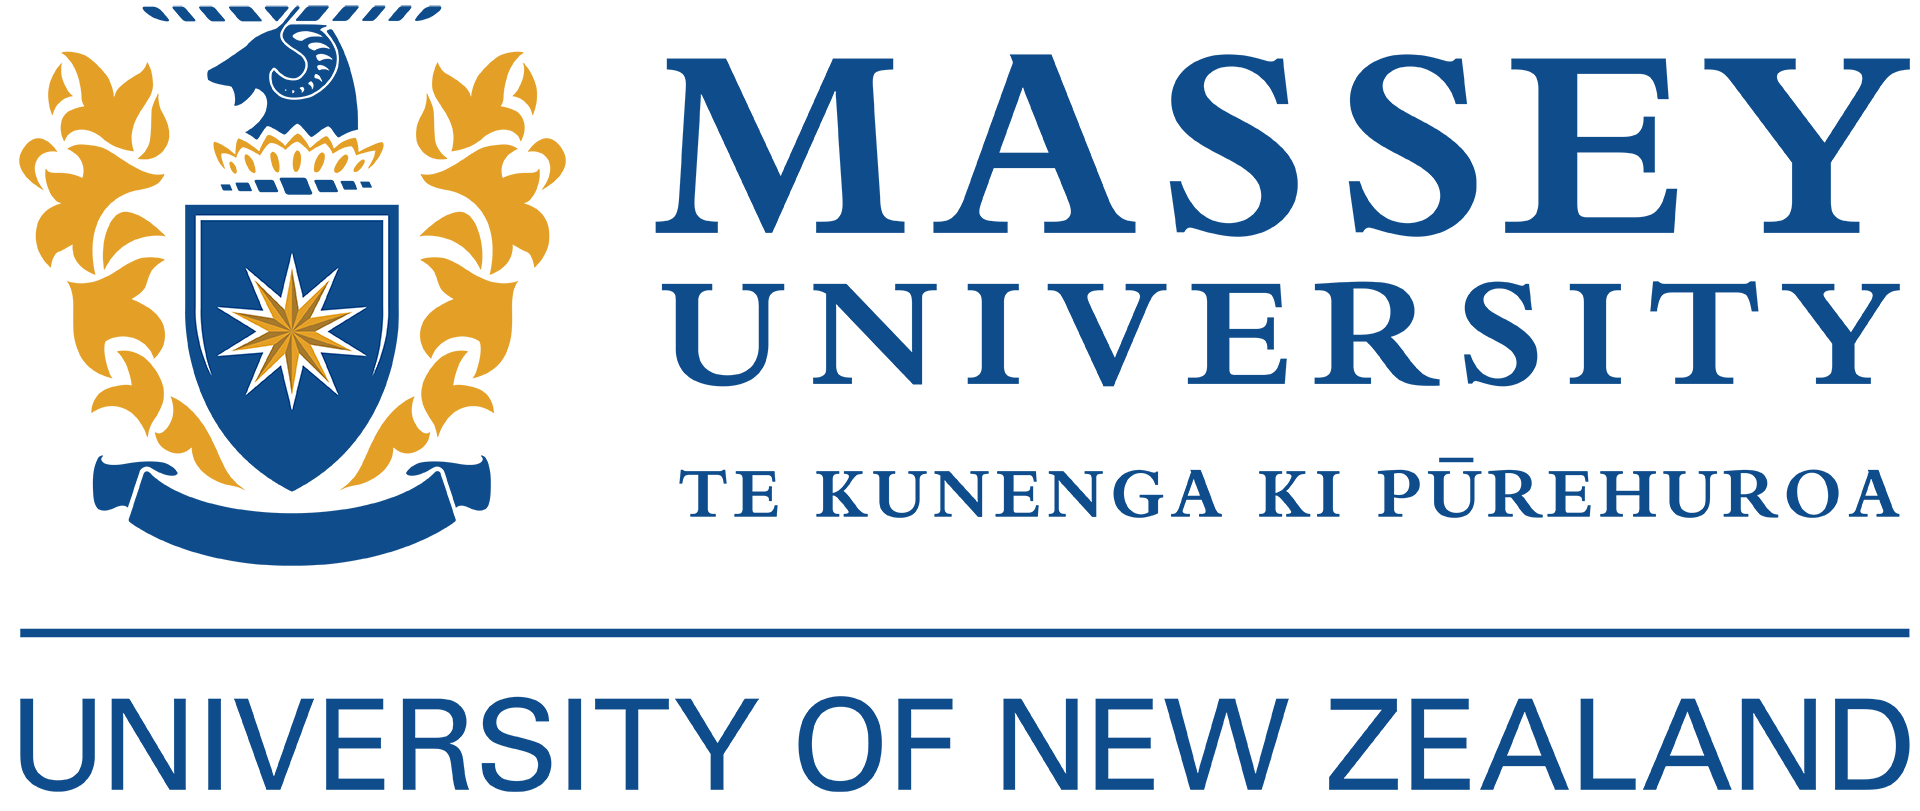 Massey_University_logo.png